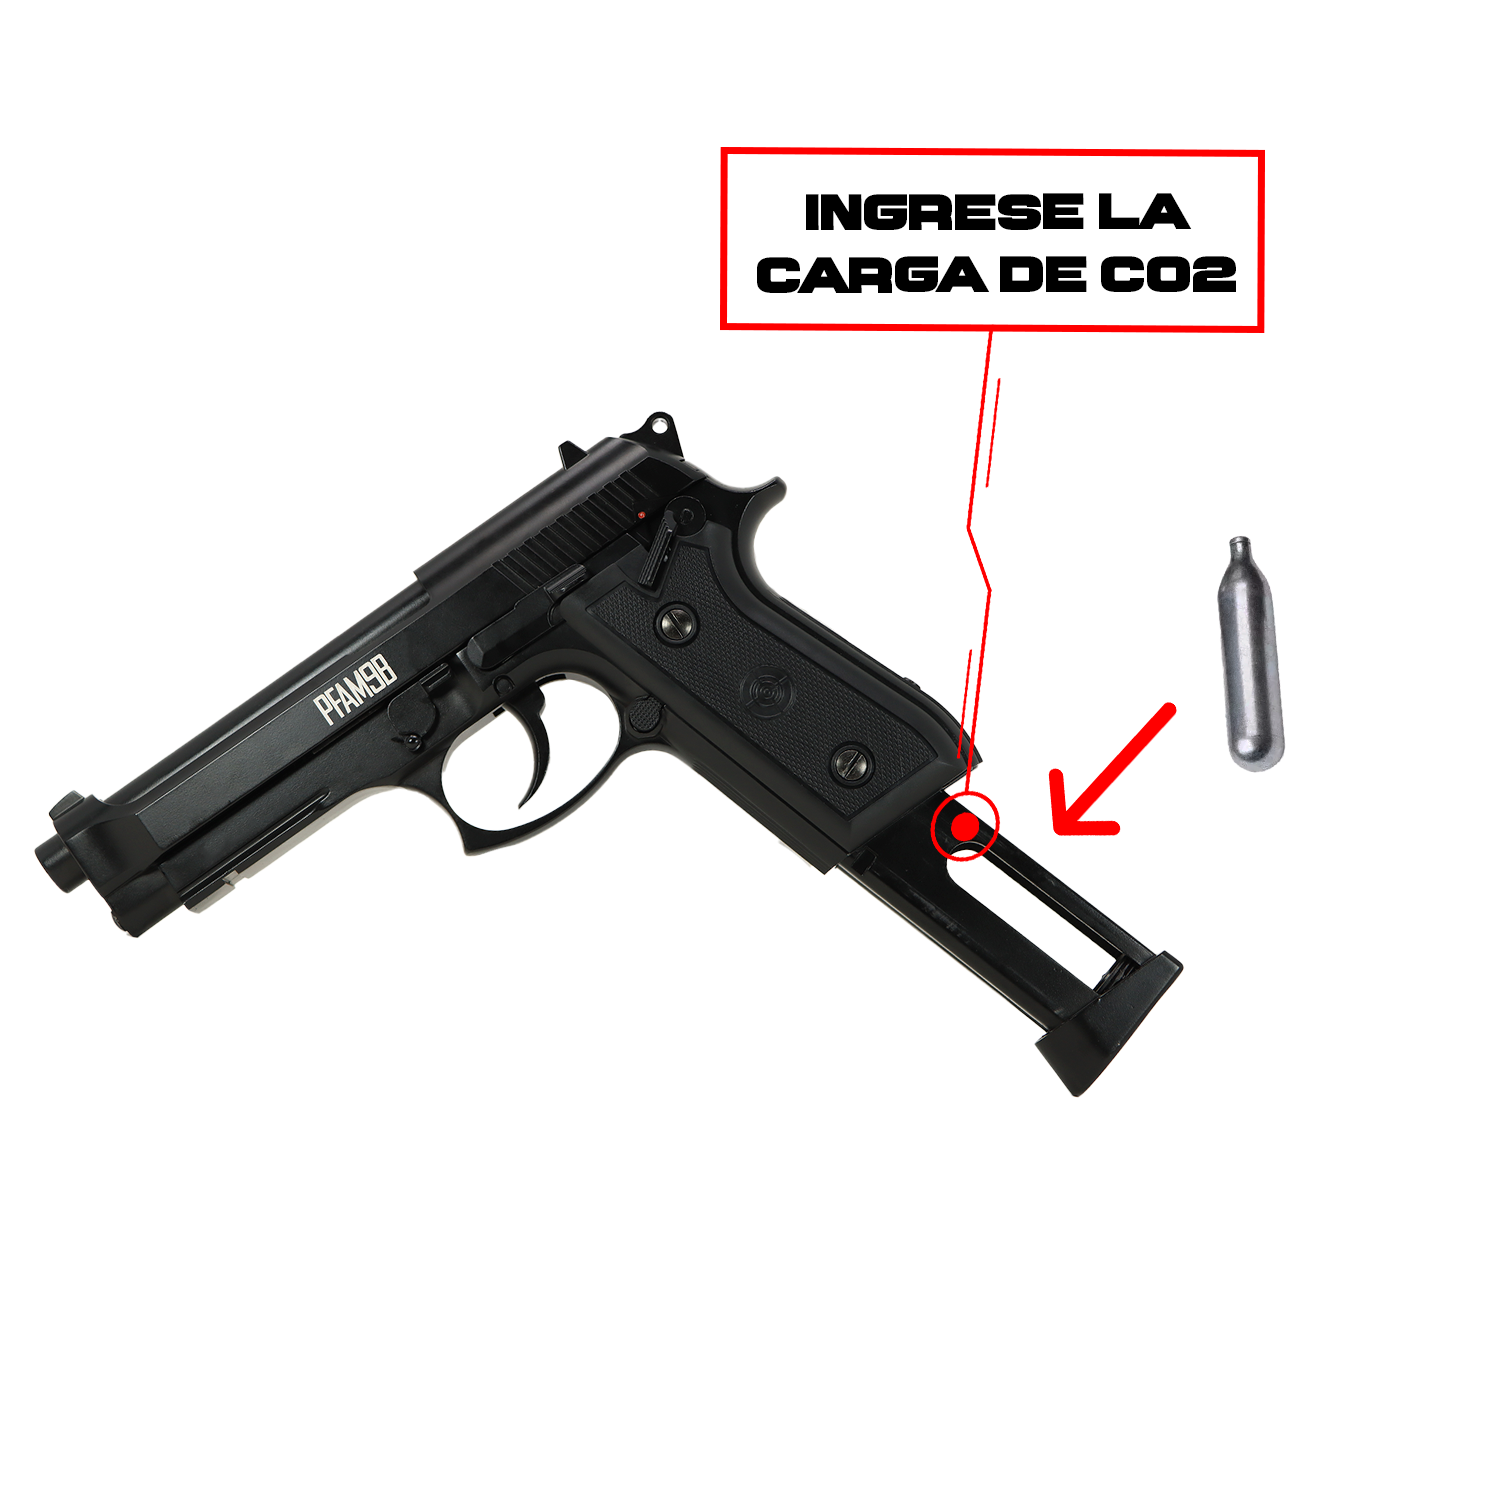 Pistola Crosman PFAM9B Blowback de Postas Cal .177 4.5mm Fullmetal